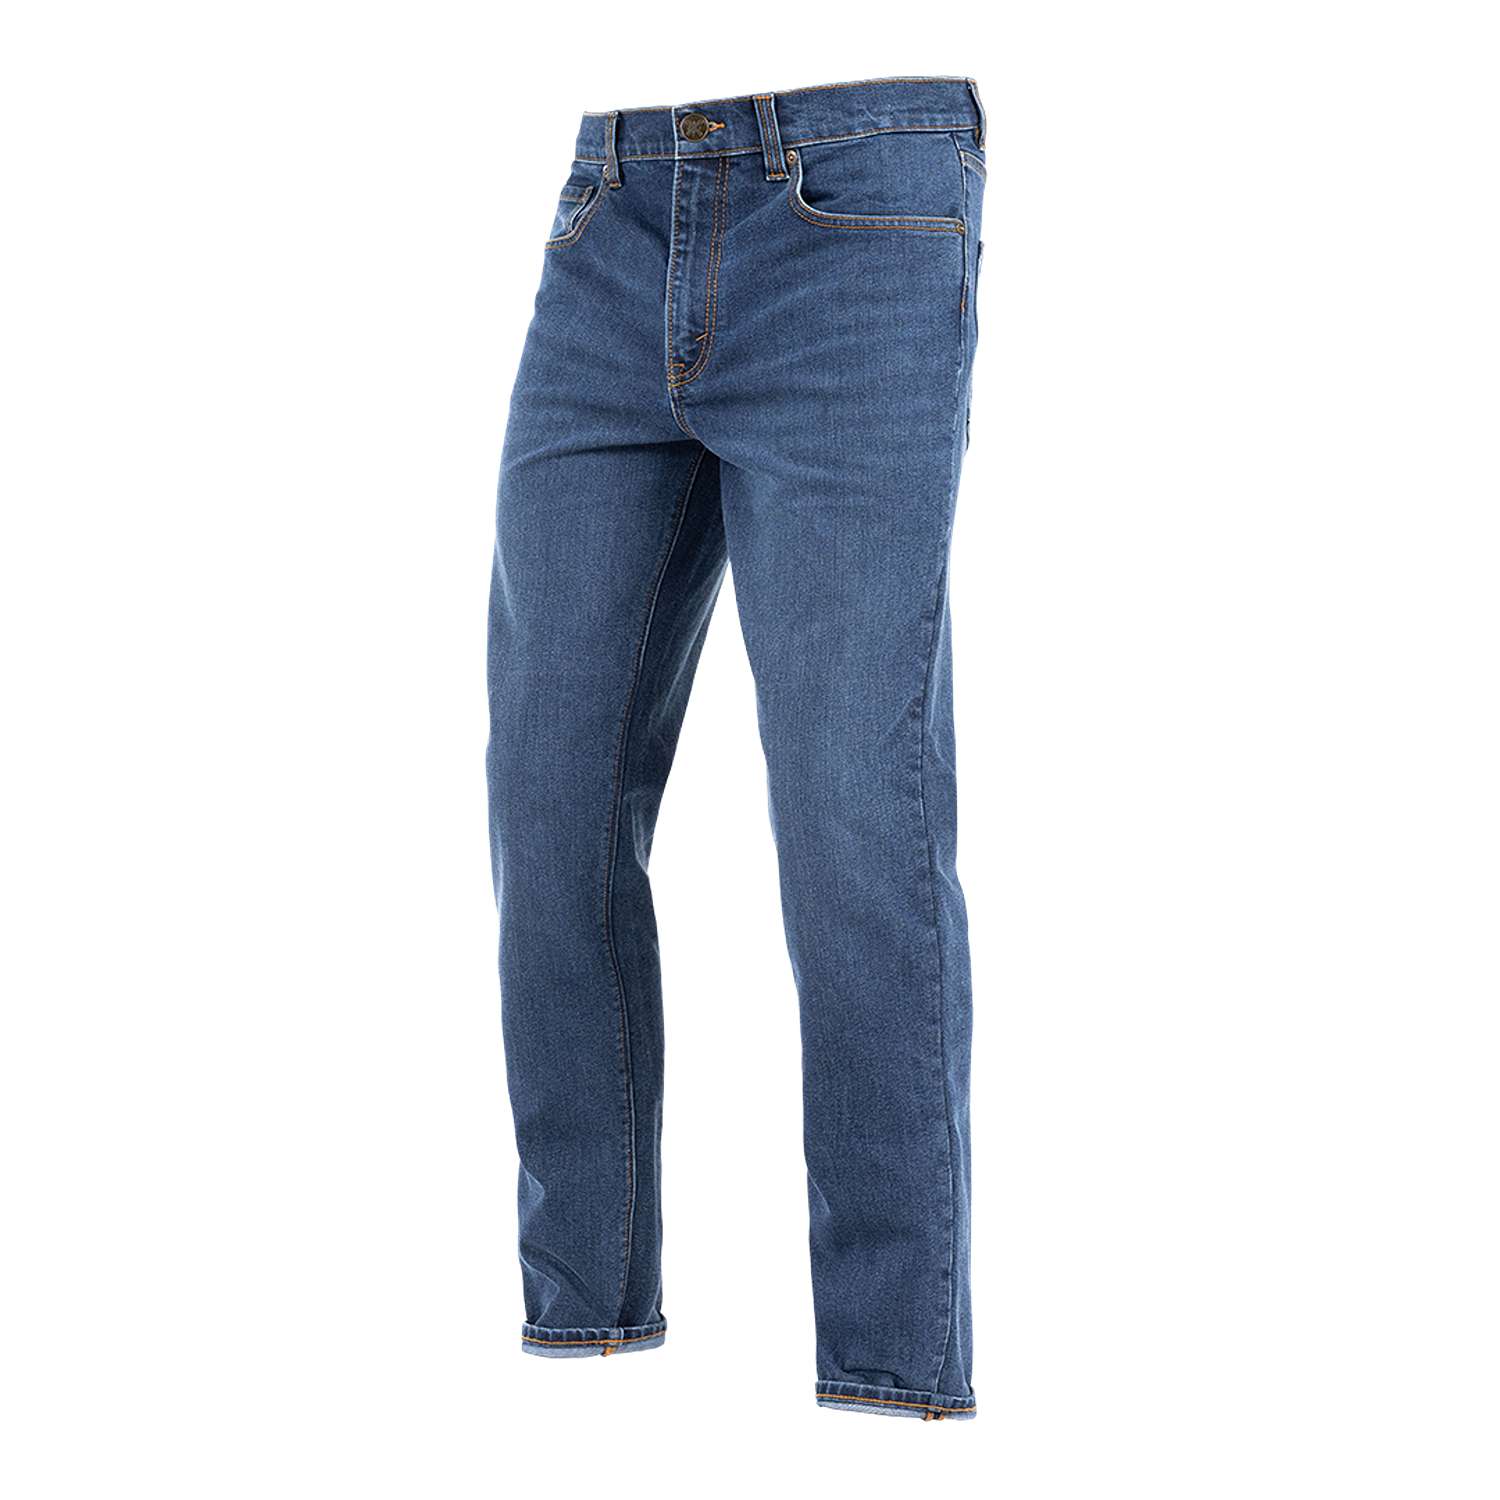 Image of John Doe Classic Tapered Jeans Indigo Size W34/L32 EN